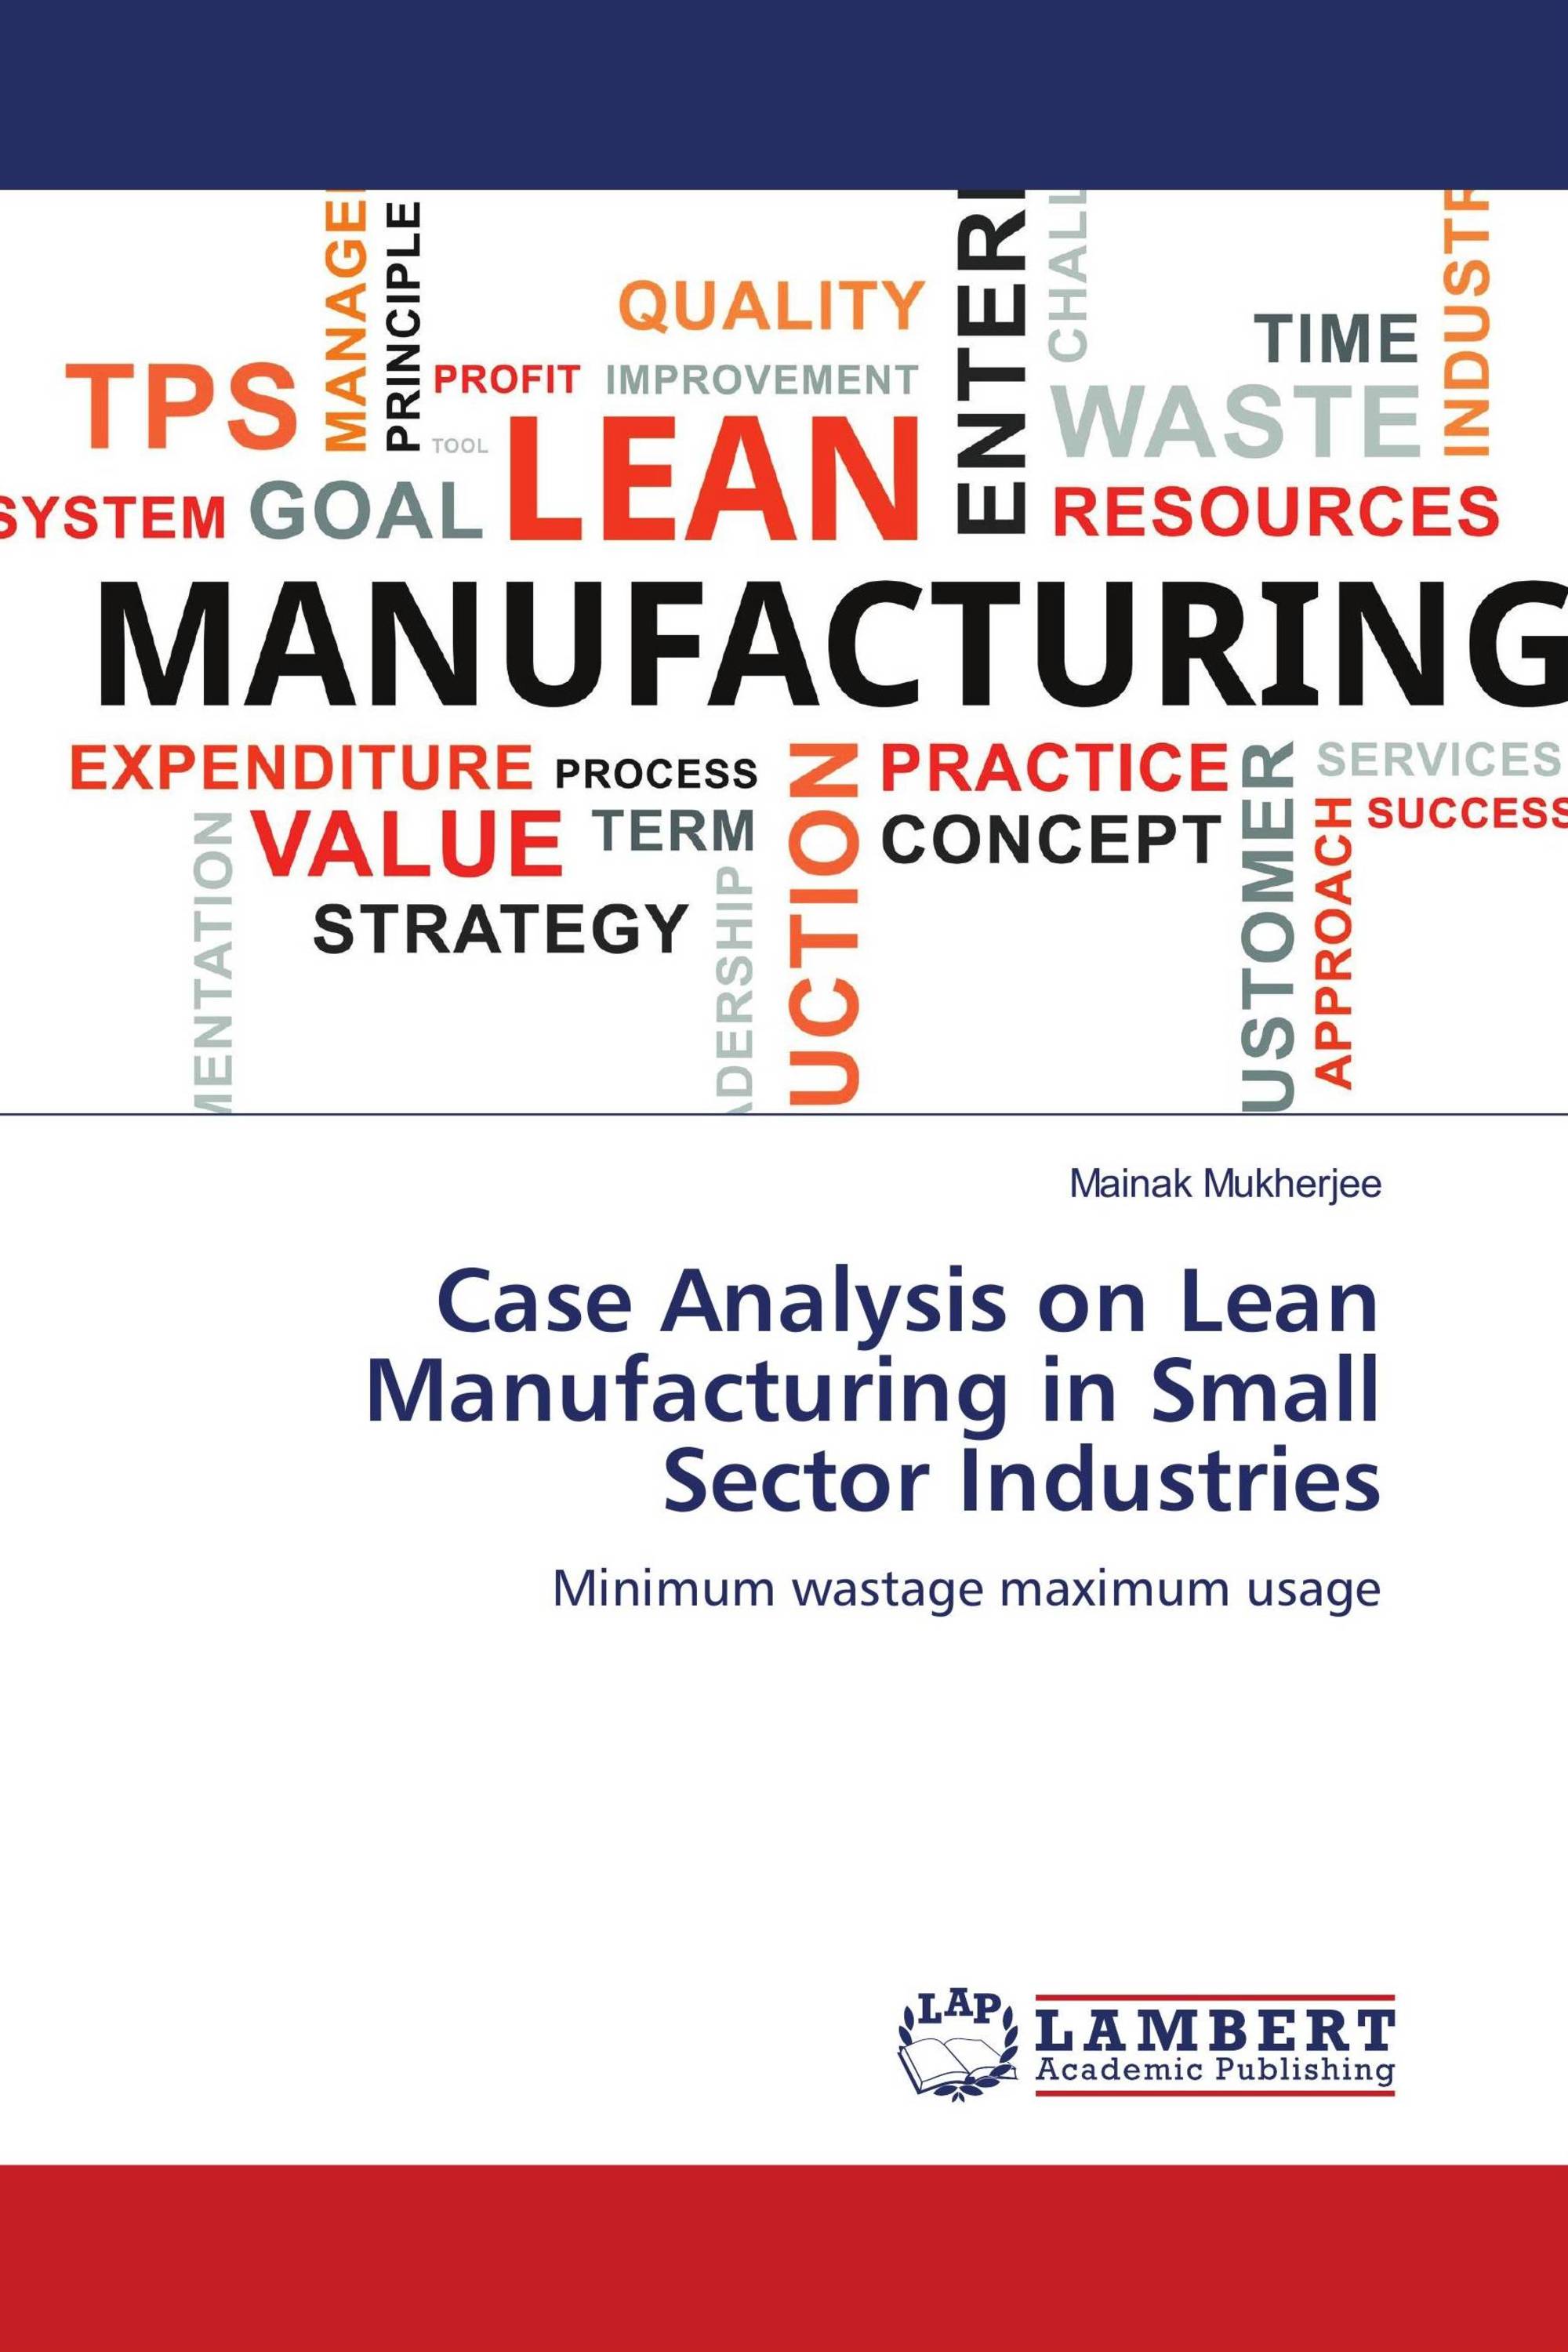 nike lean manufacturing case study pdf